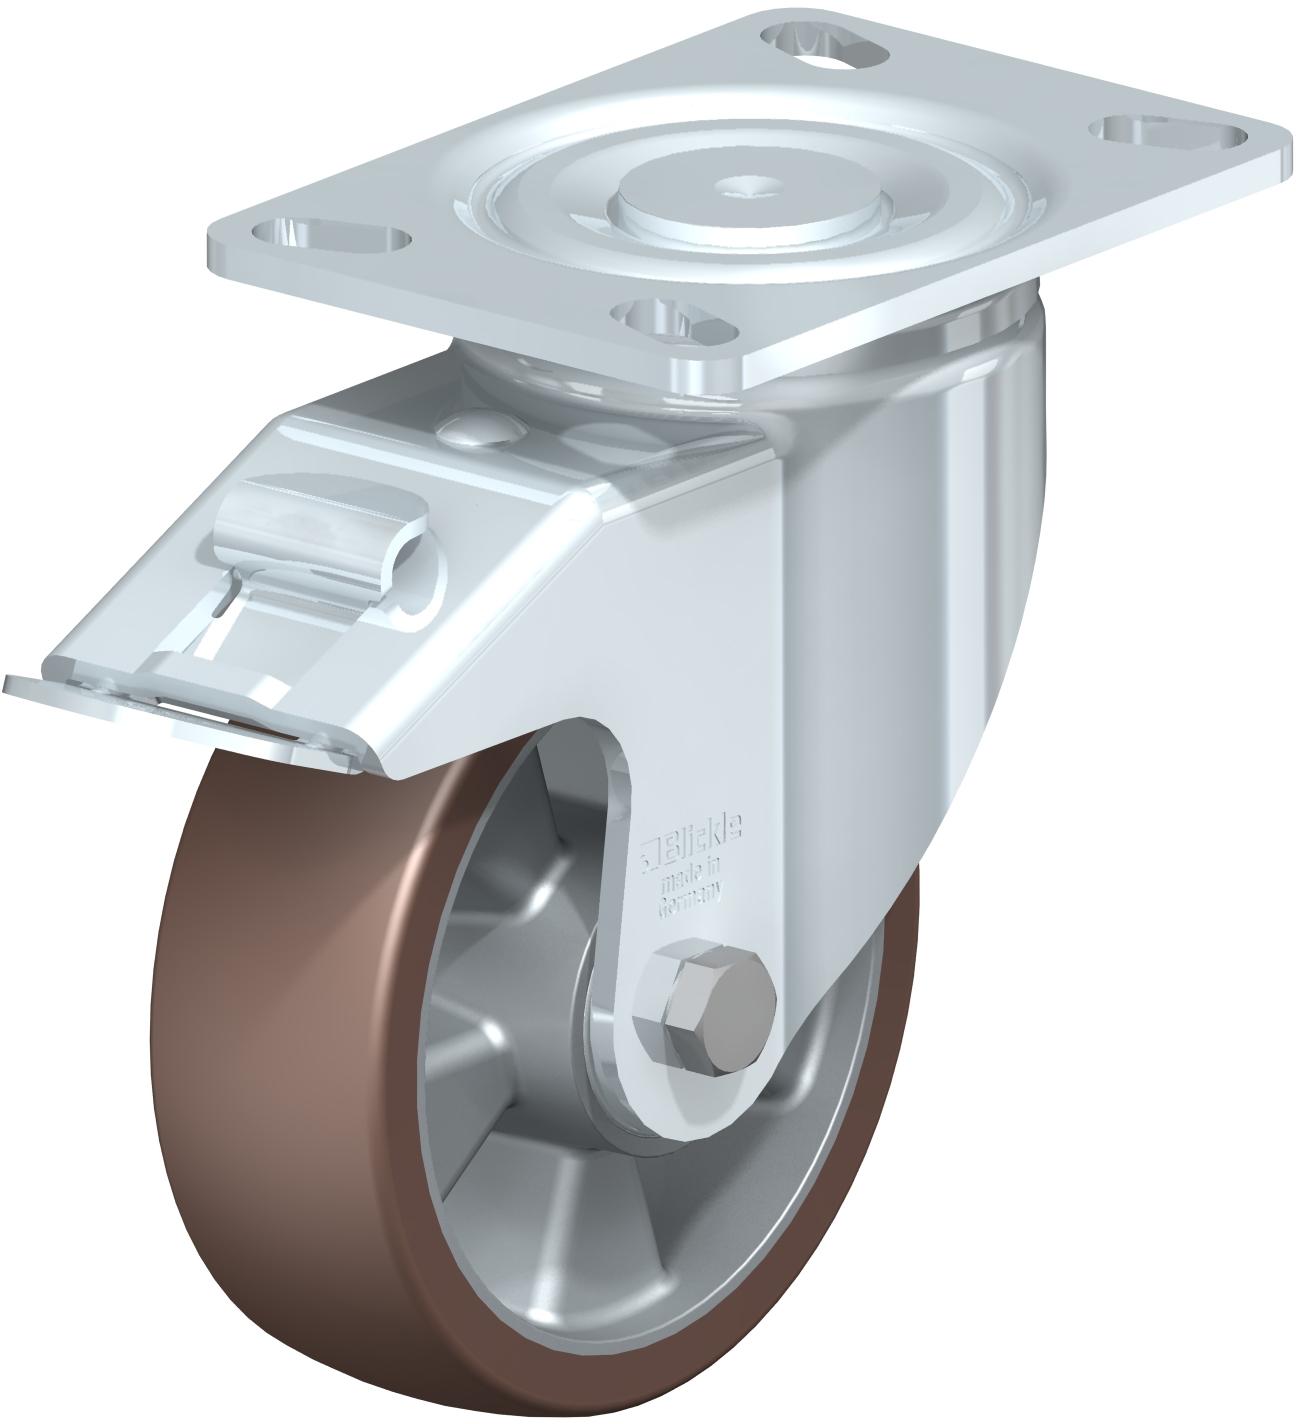 Heavy Duty Industrial Large Top Plate Casters - Swivel, Ball Bearing, Blickle Besthane Brown Polyurethane Tread On Aluminum Core Wheel, Stop-Fix Brake LH-ALB 150K-16-FI